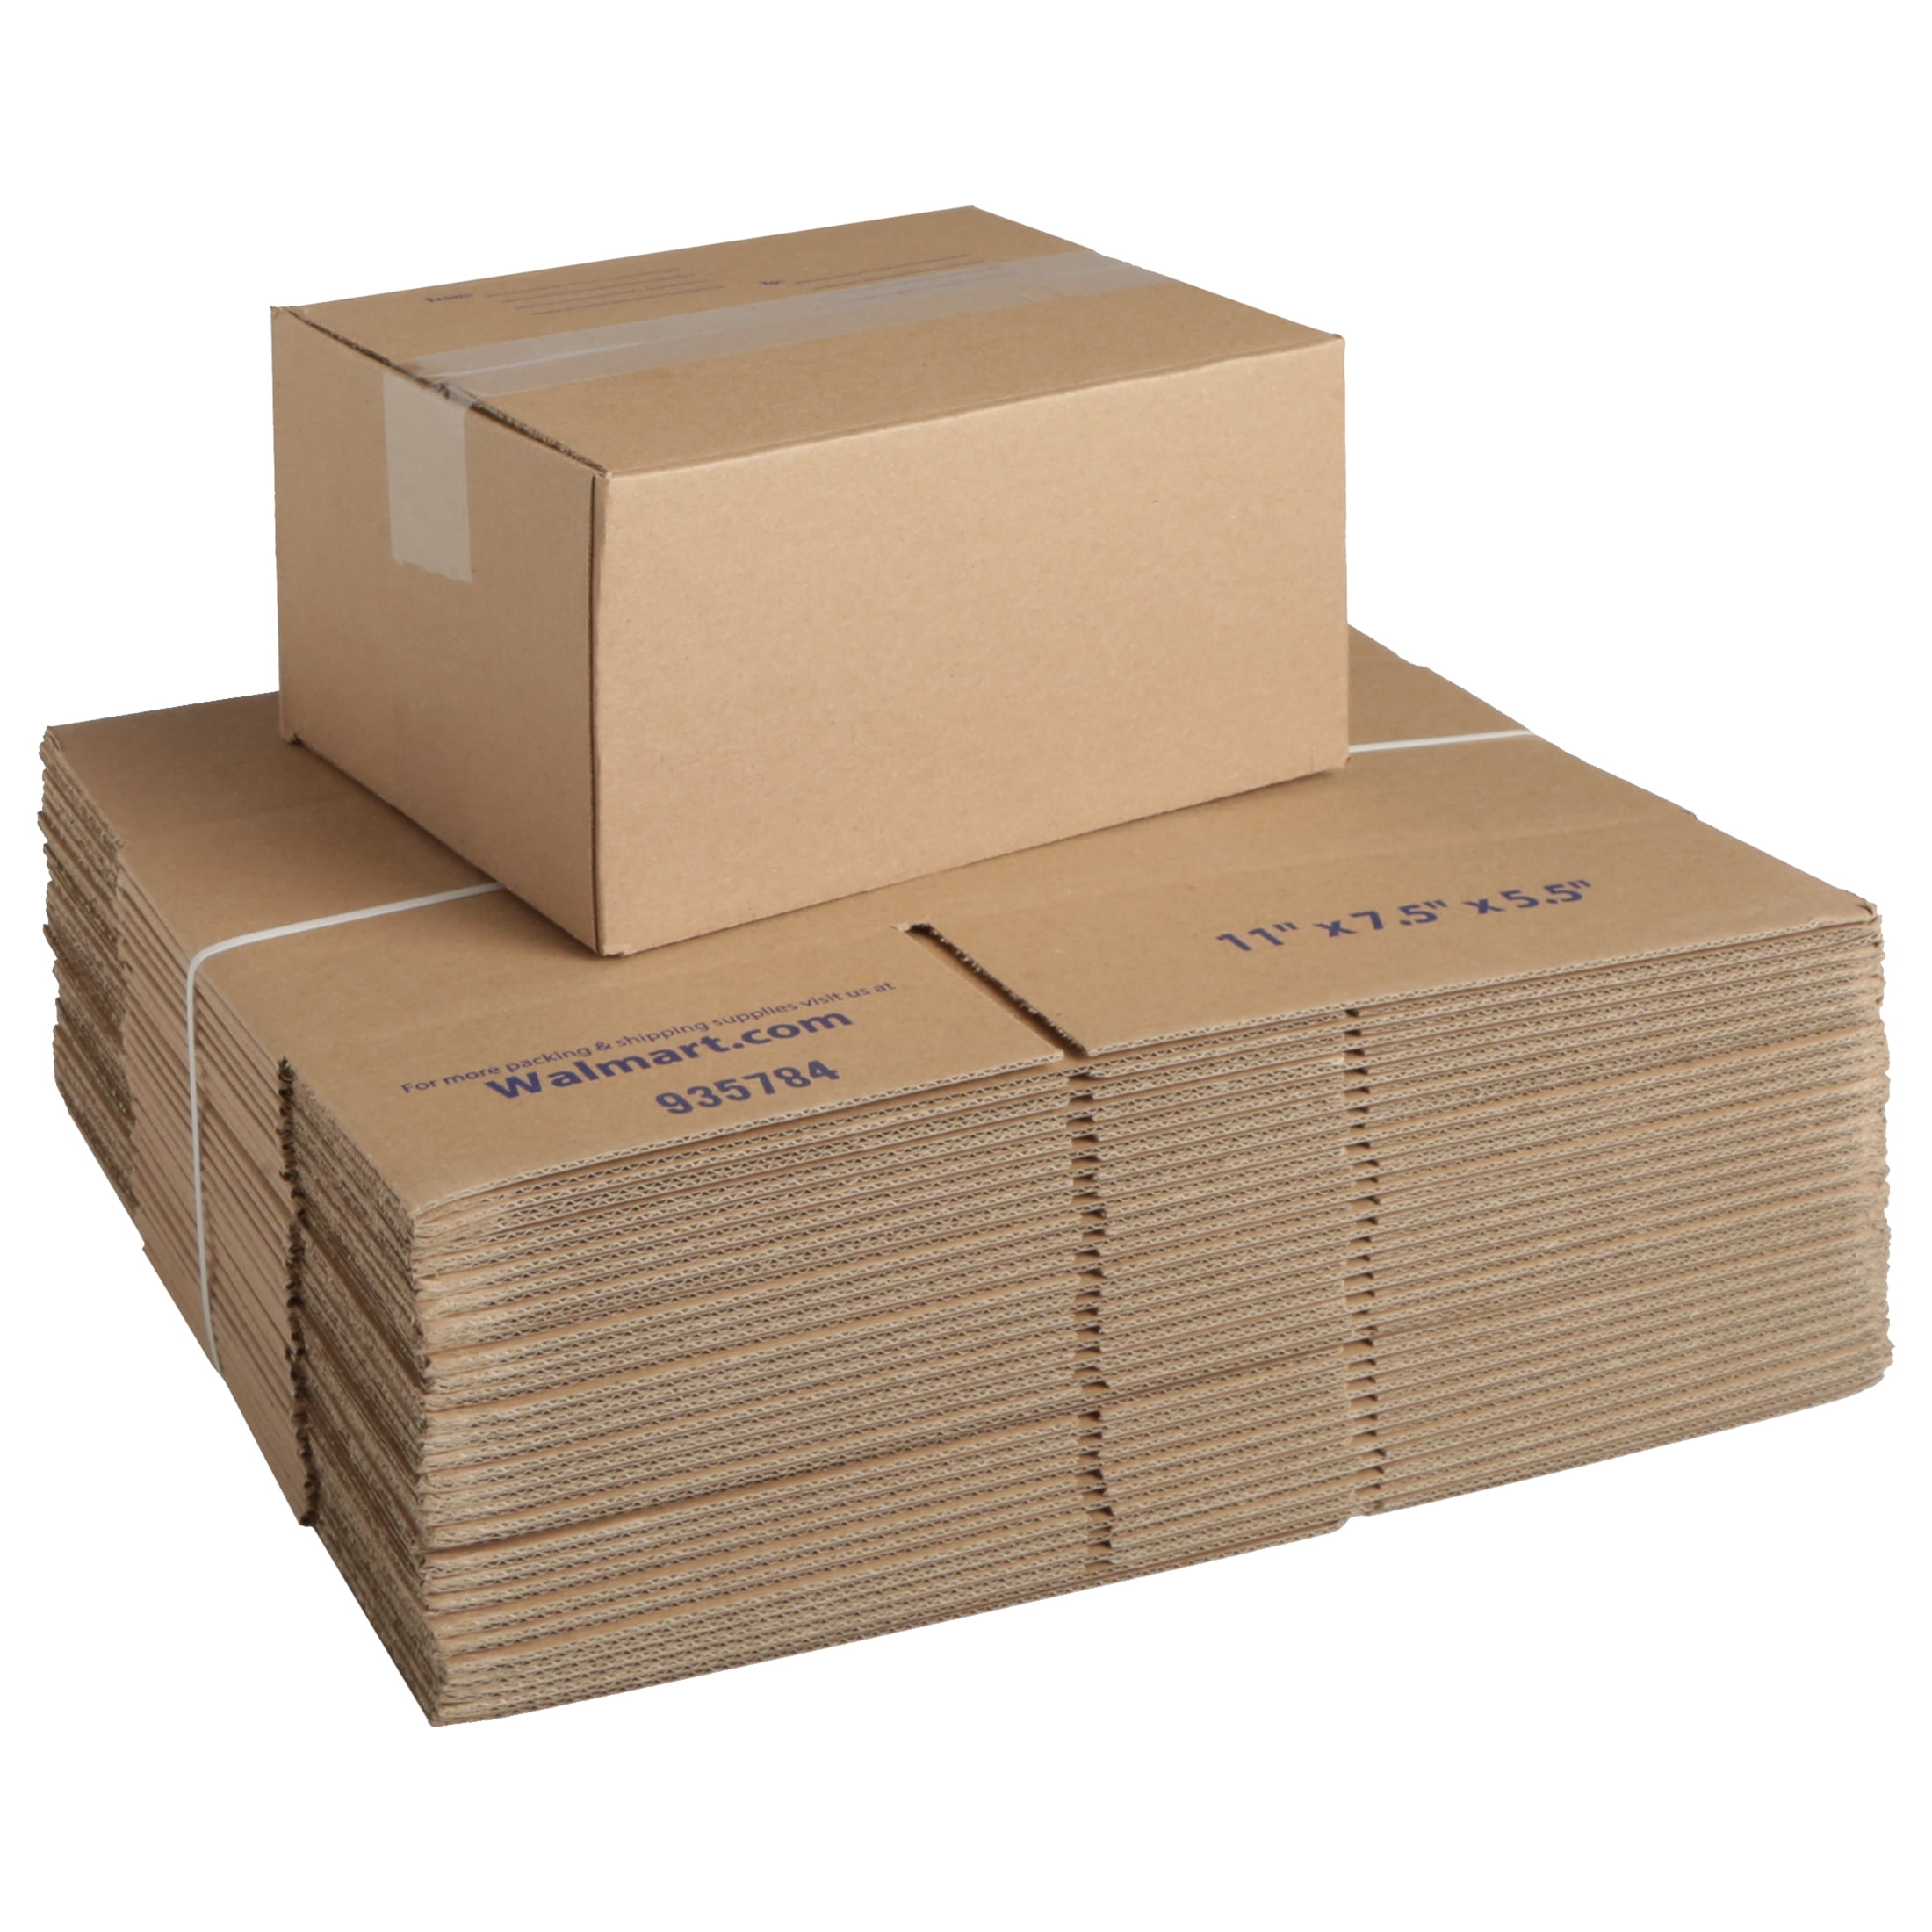 9 Shoe Boxes Lids Postal Cardboard Small Medium Mailing Shipping Cartons 